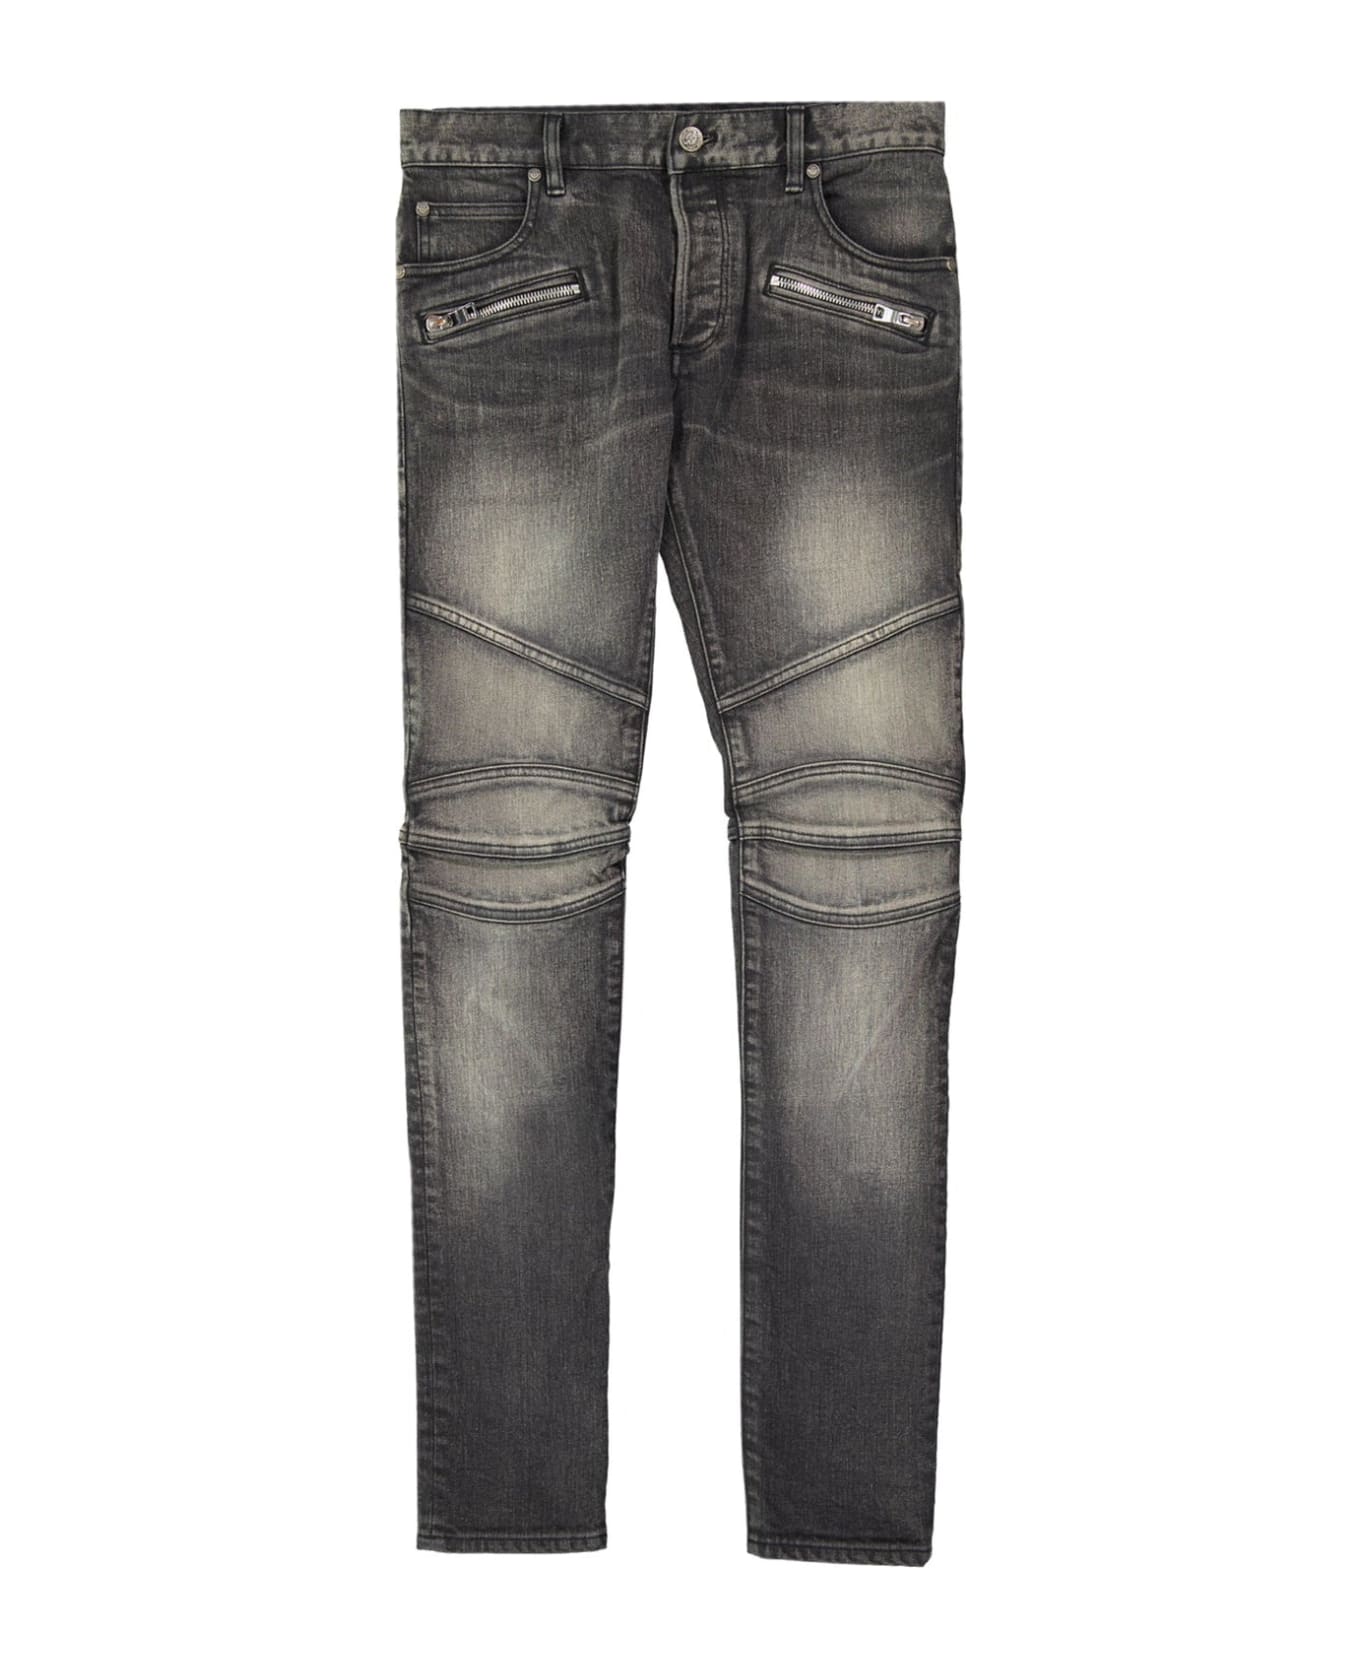 Balmain Denim Jeans - Gray